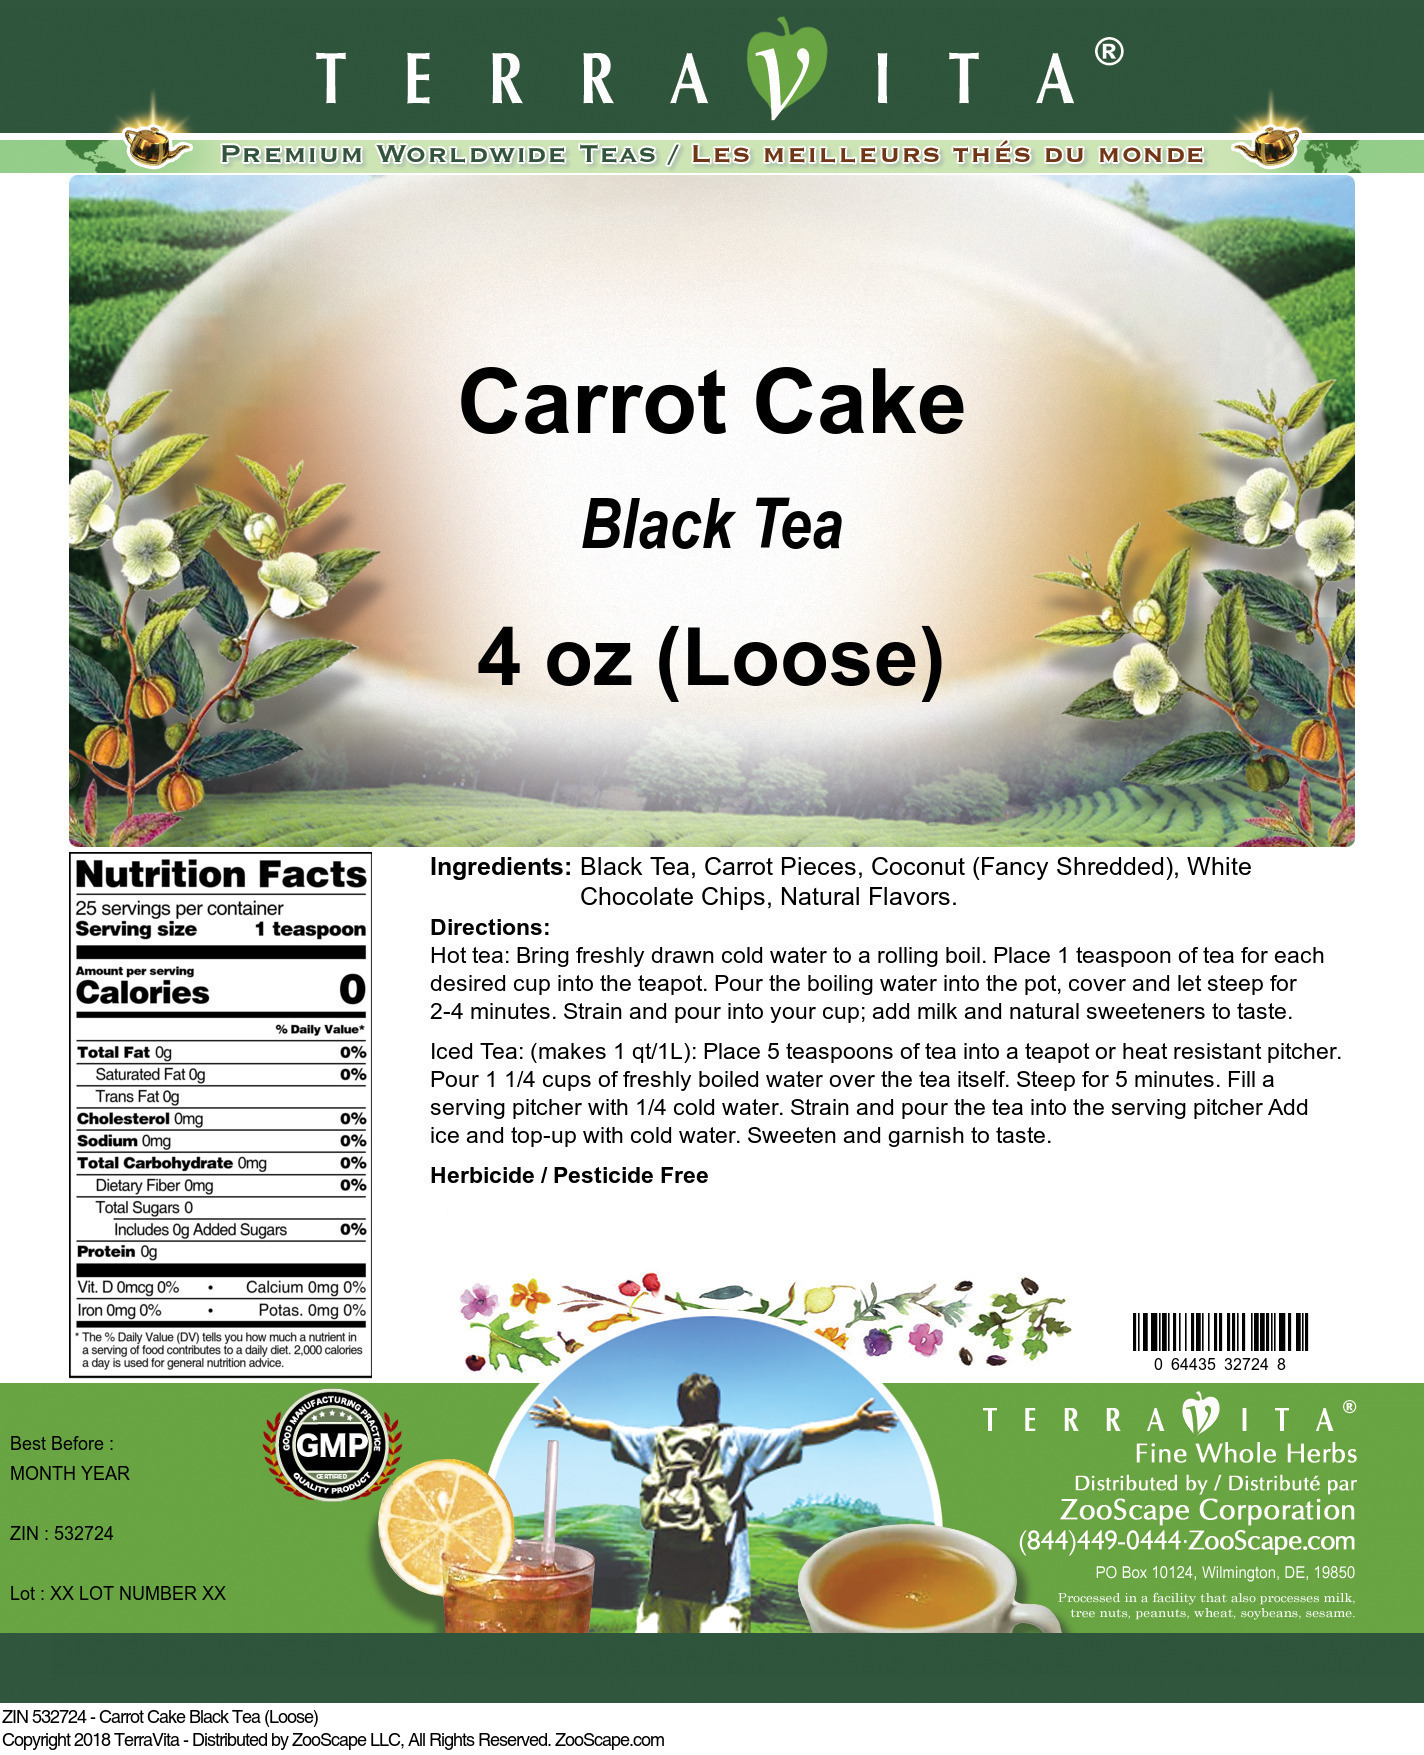 Carrot Cake Black Tea (Loose) - Label